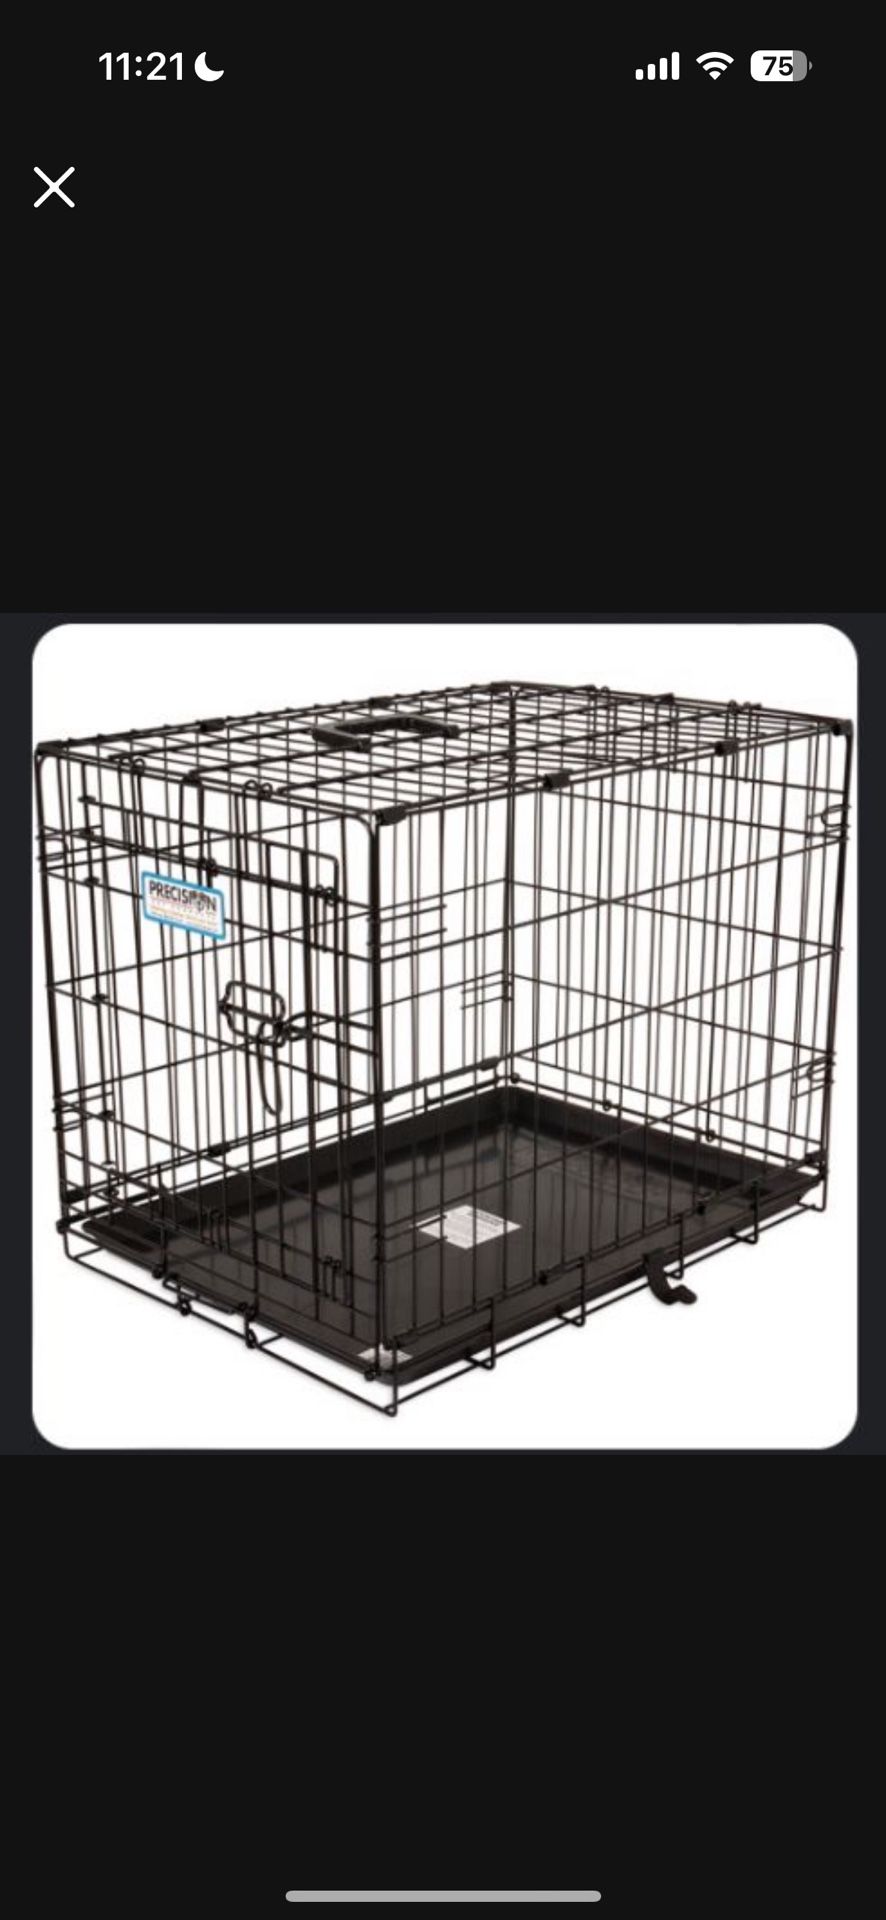 XL Dog Crate FREE